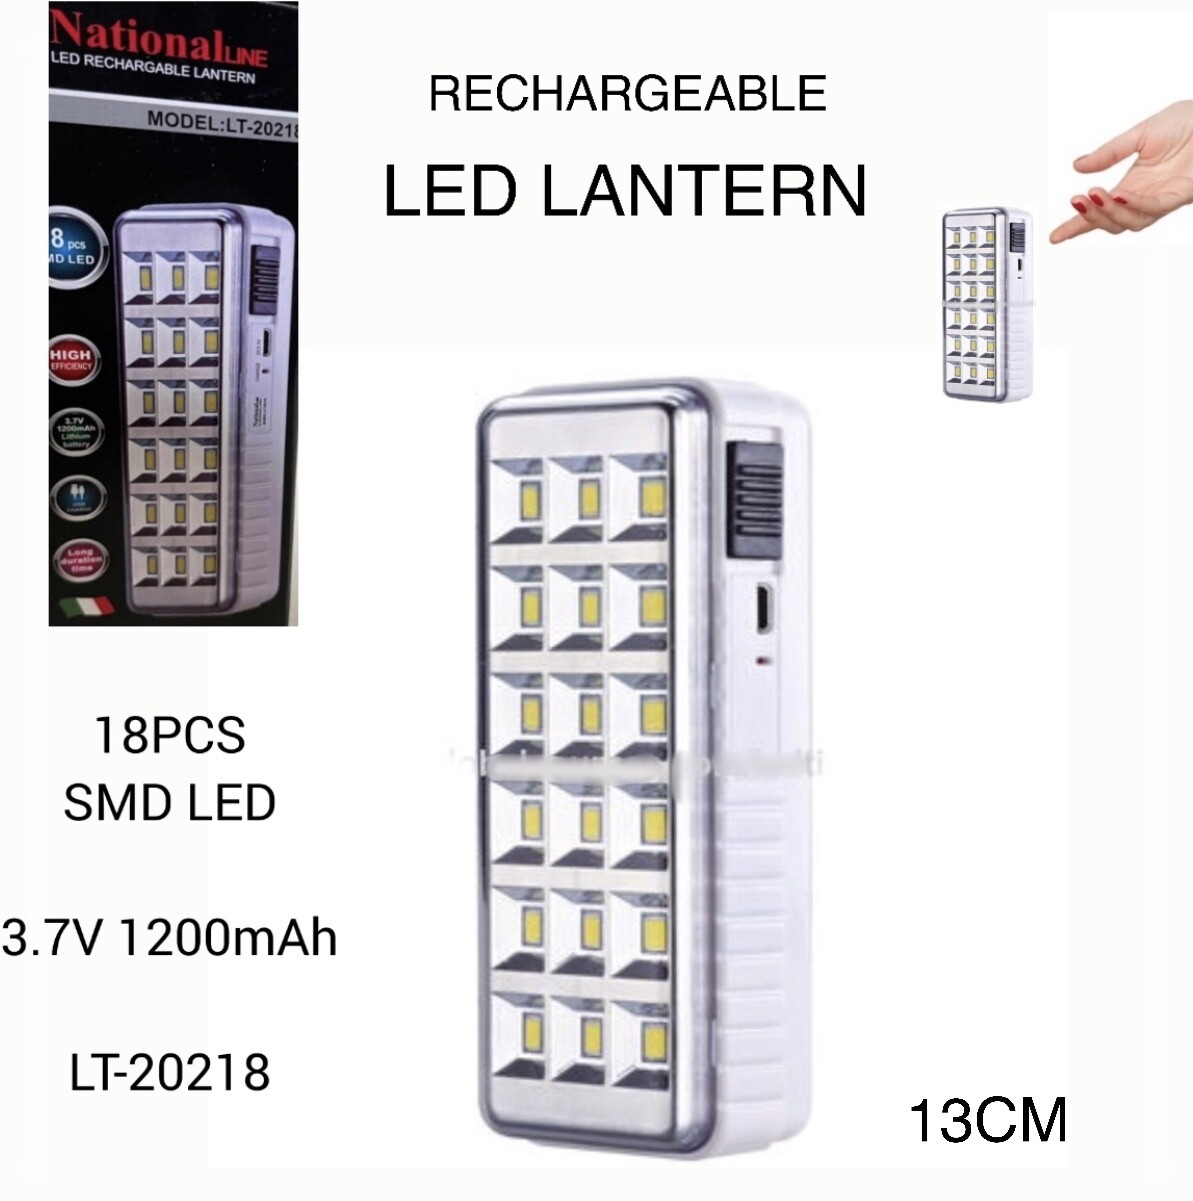 Rechargeable Light (LT-20218)